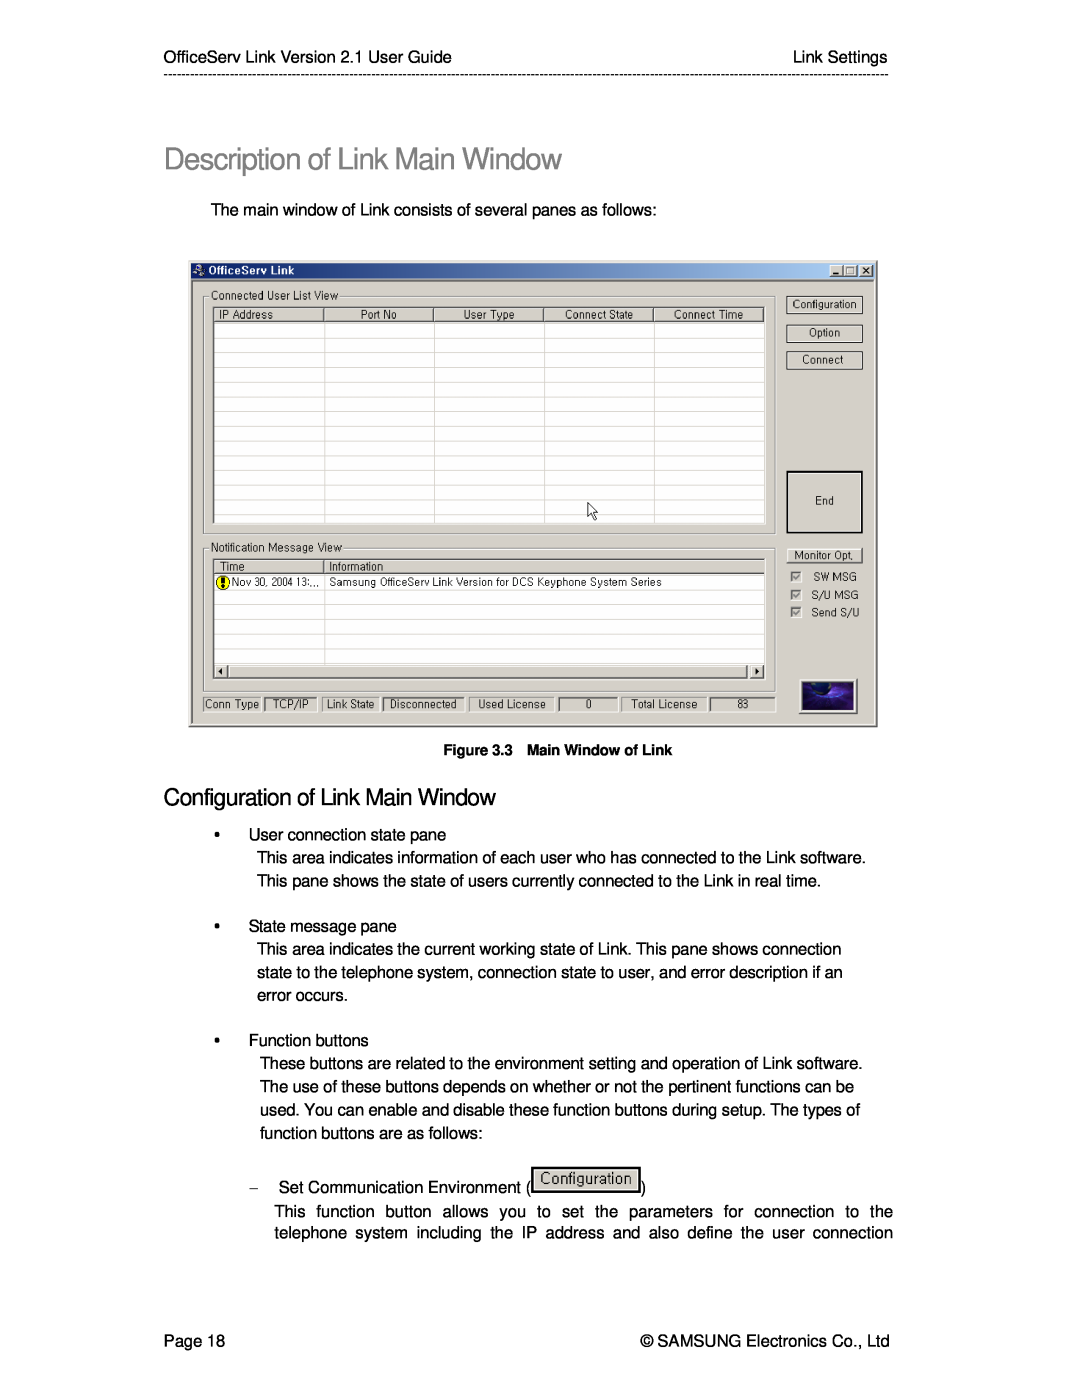 Samsung Version 2.1 manual Description of Link Main Window, Configuration of Link Main Window 